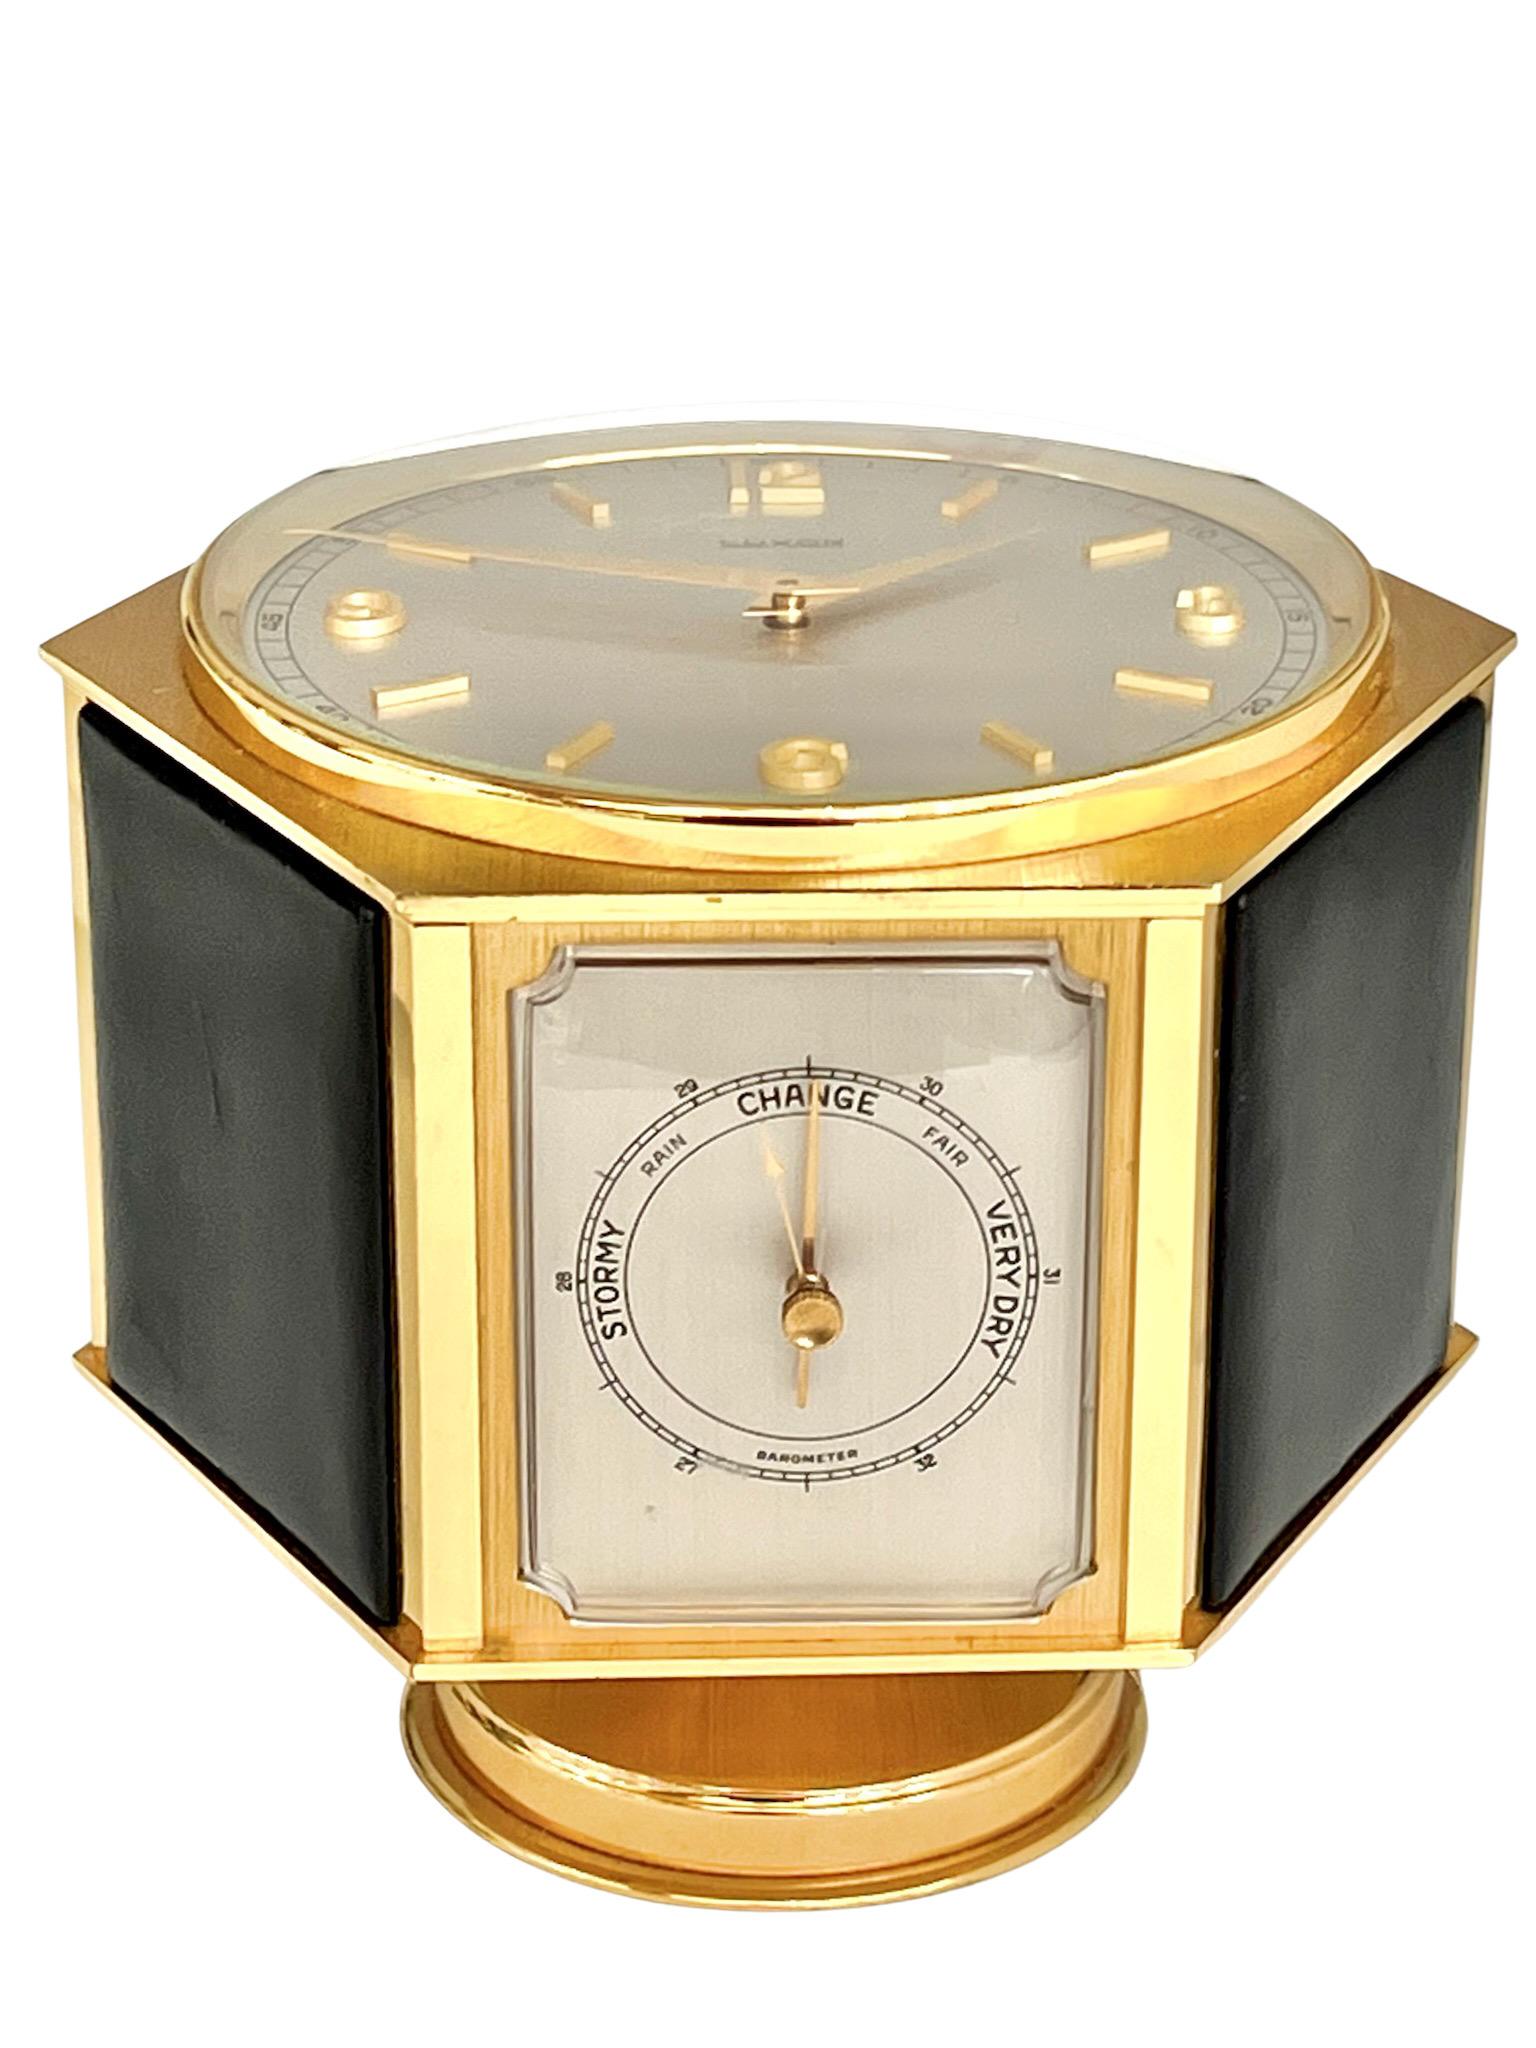 Luxor Midcentury Gilt Desk Clock and Weather Compendium For Sale 4